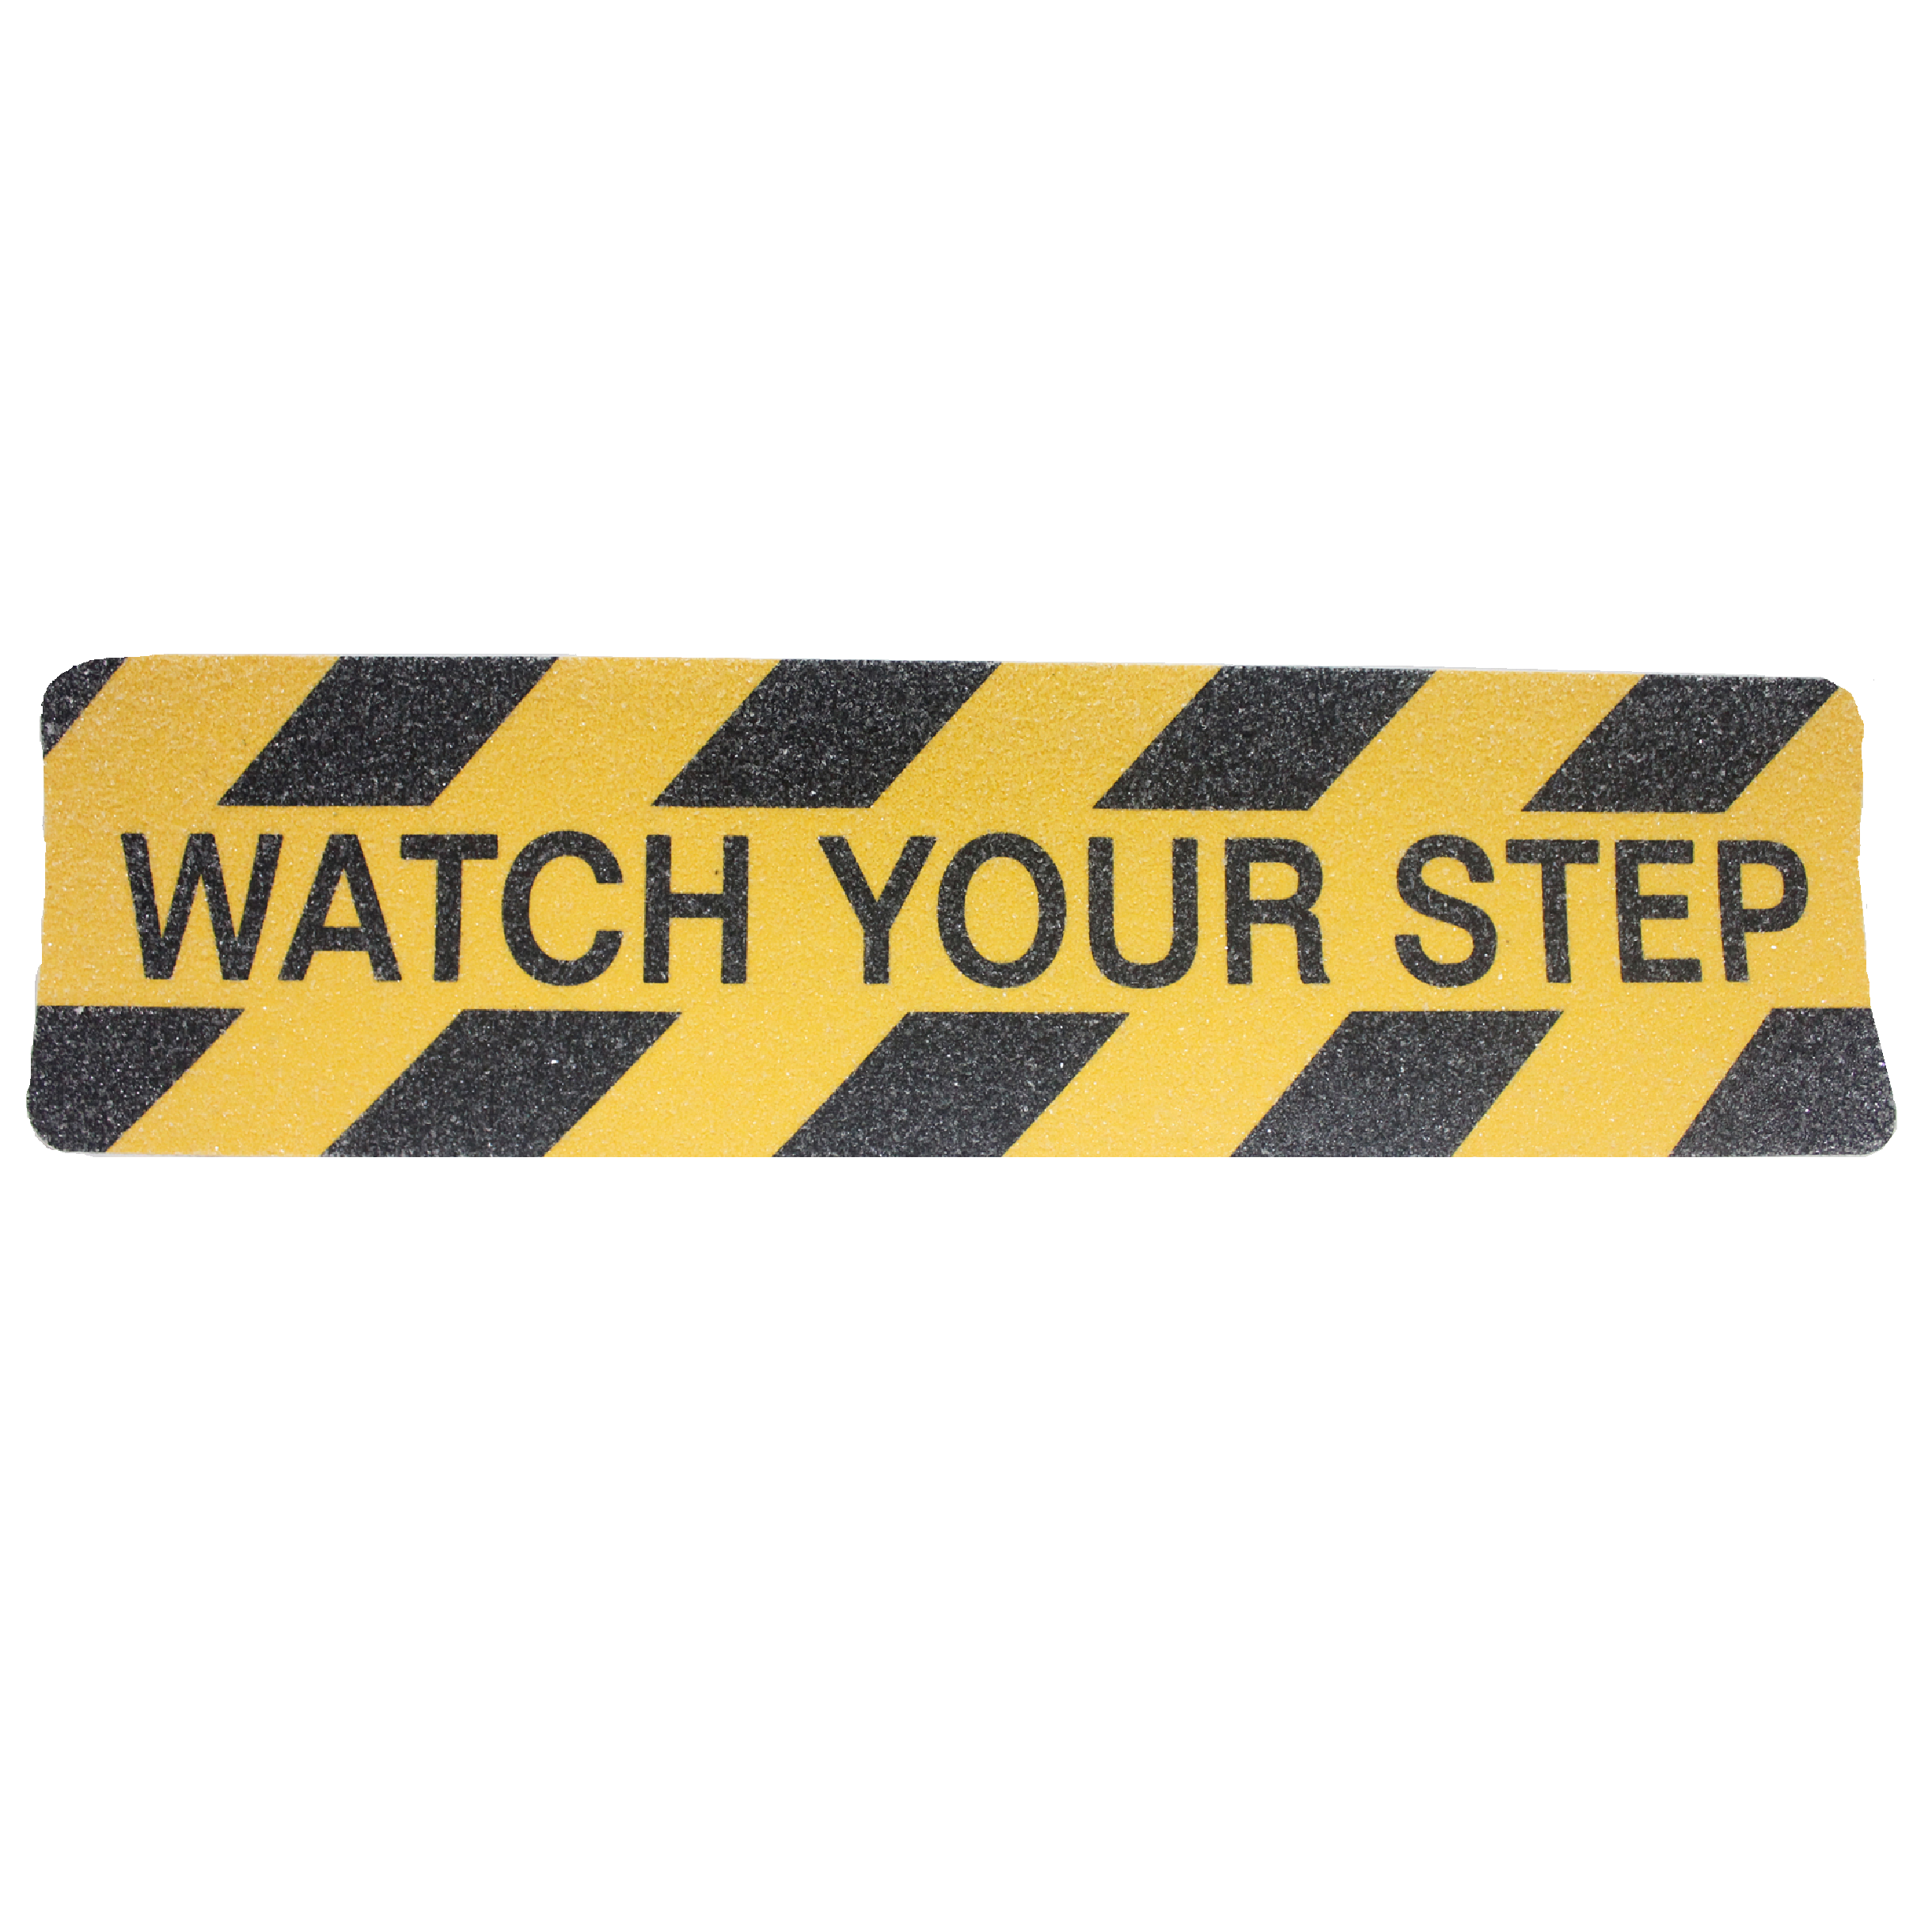 WATCH YOUR STEP Anti-Slip Tape 15CM X 60CM SELF ADHESIVE